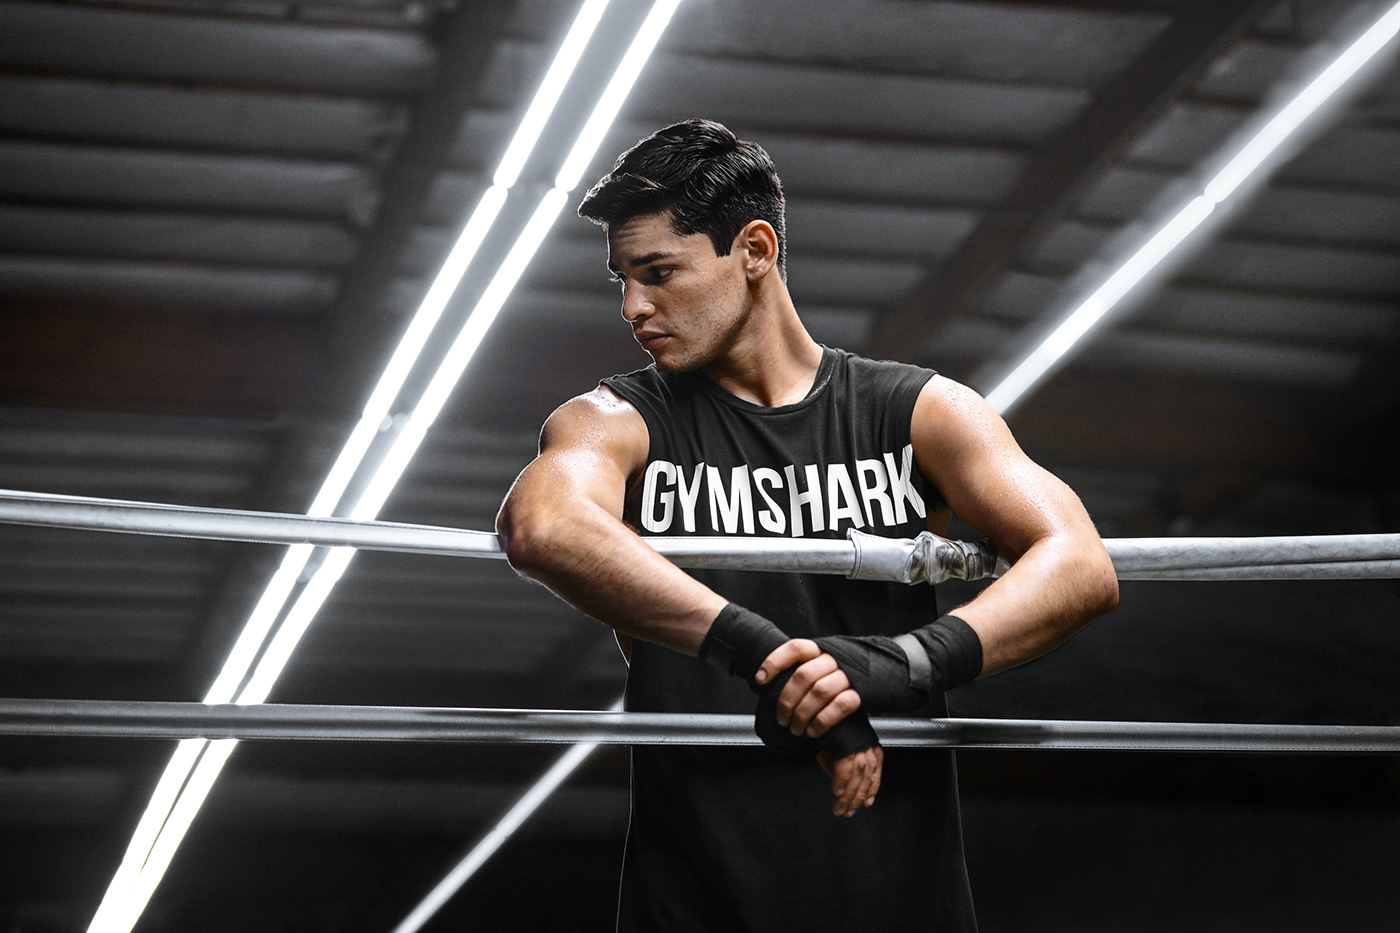 Boxing Ryan garica gymshark fitness Boxer sports Nikon